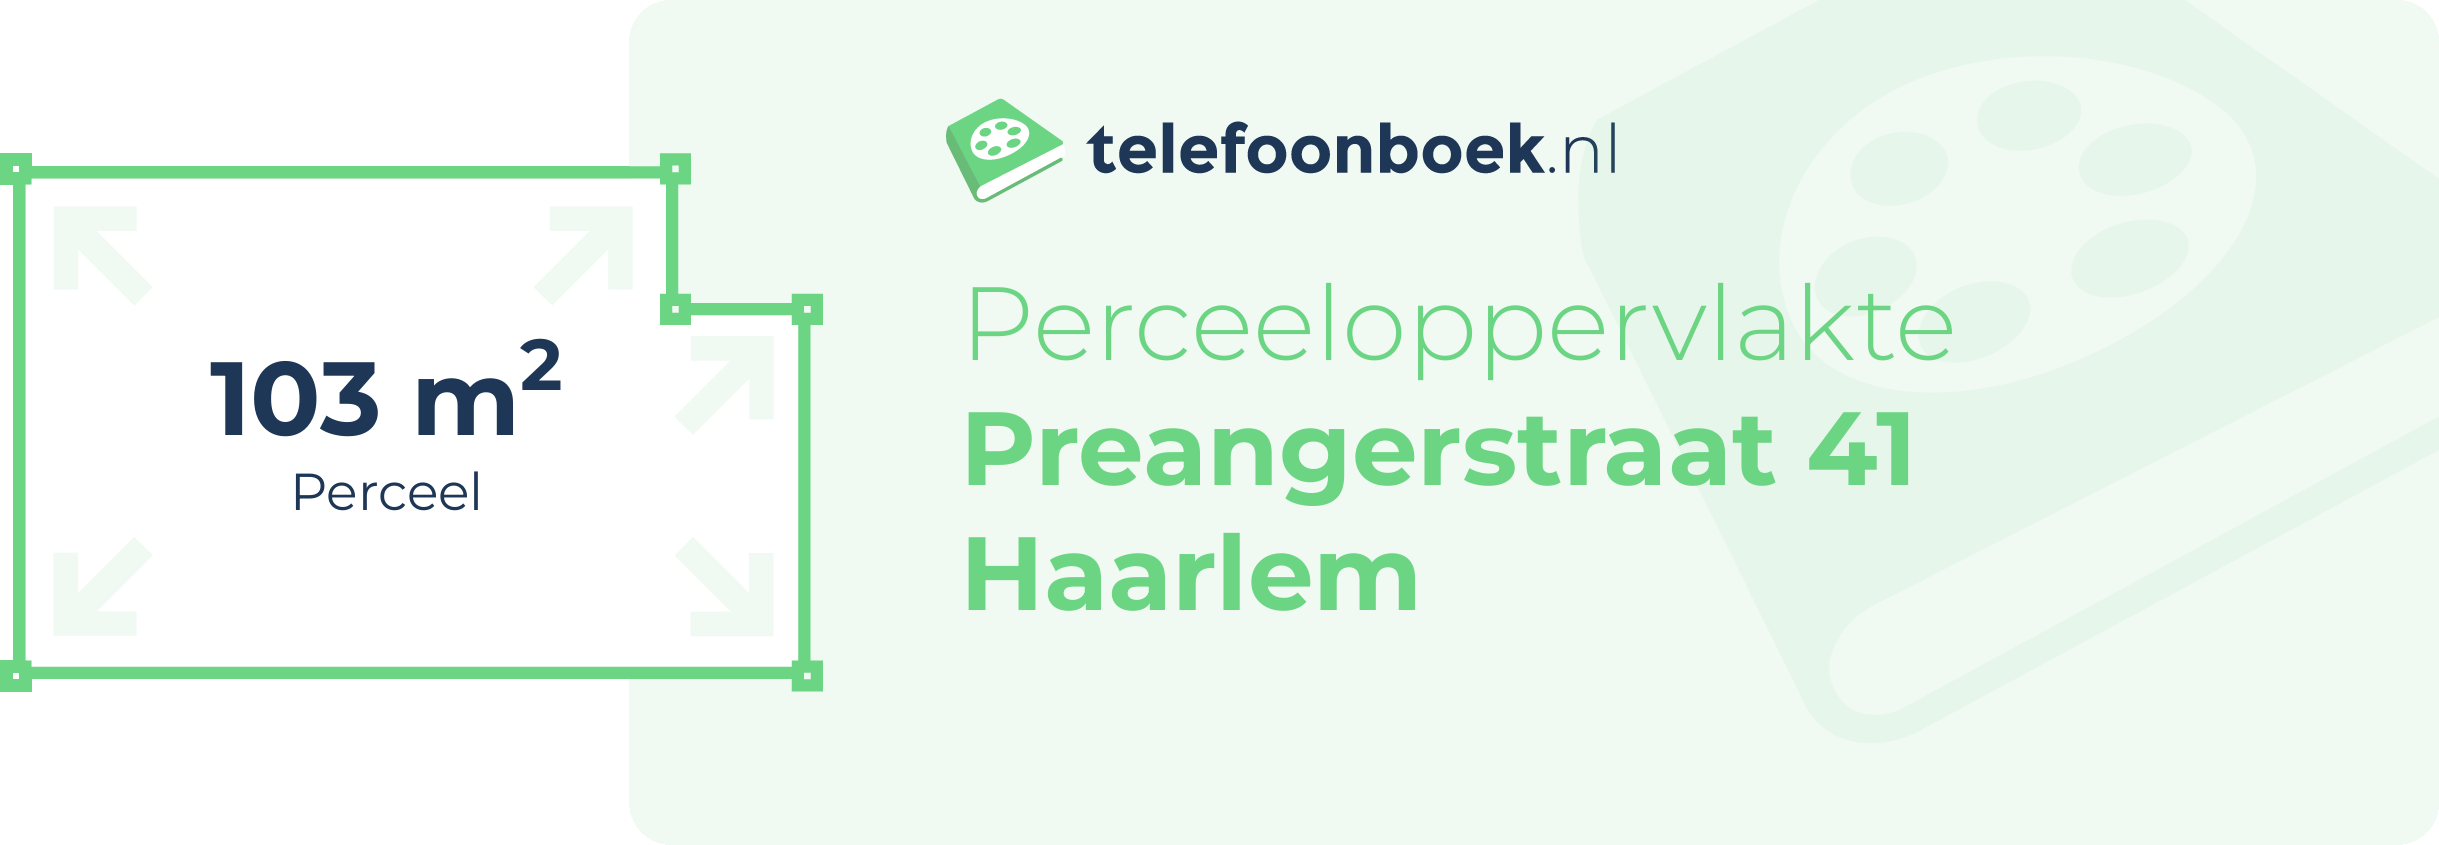 Perceeloppervlakte Preangerstraat 41 Haarlem